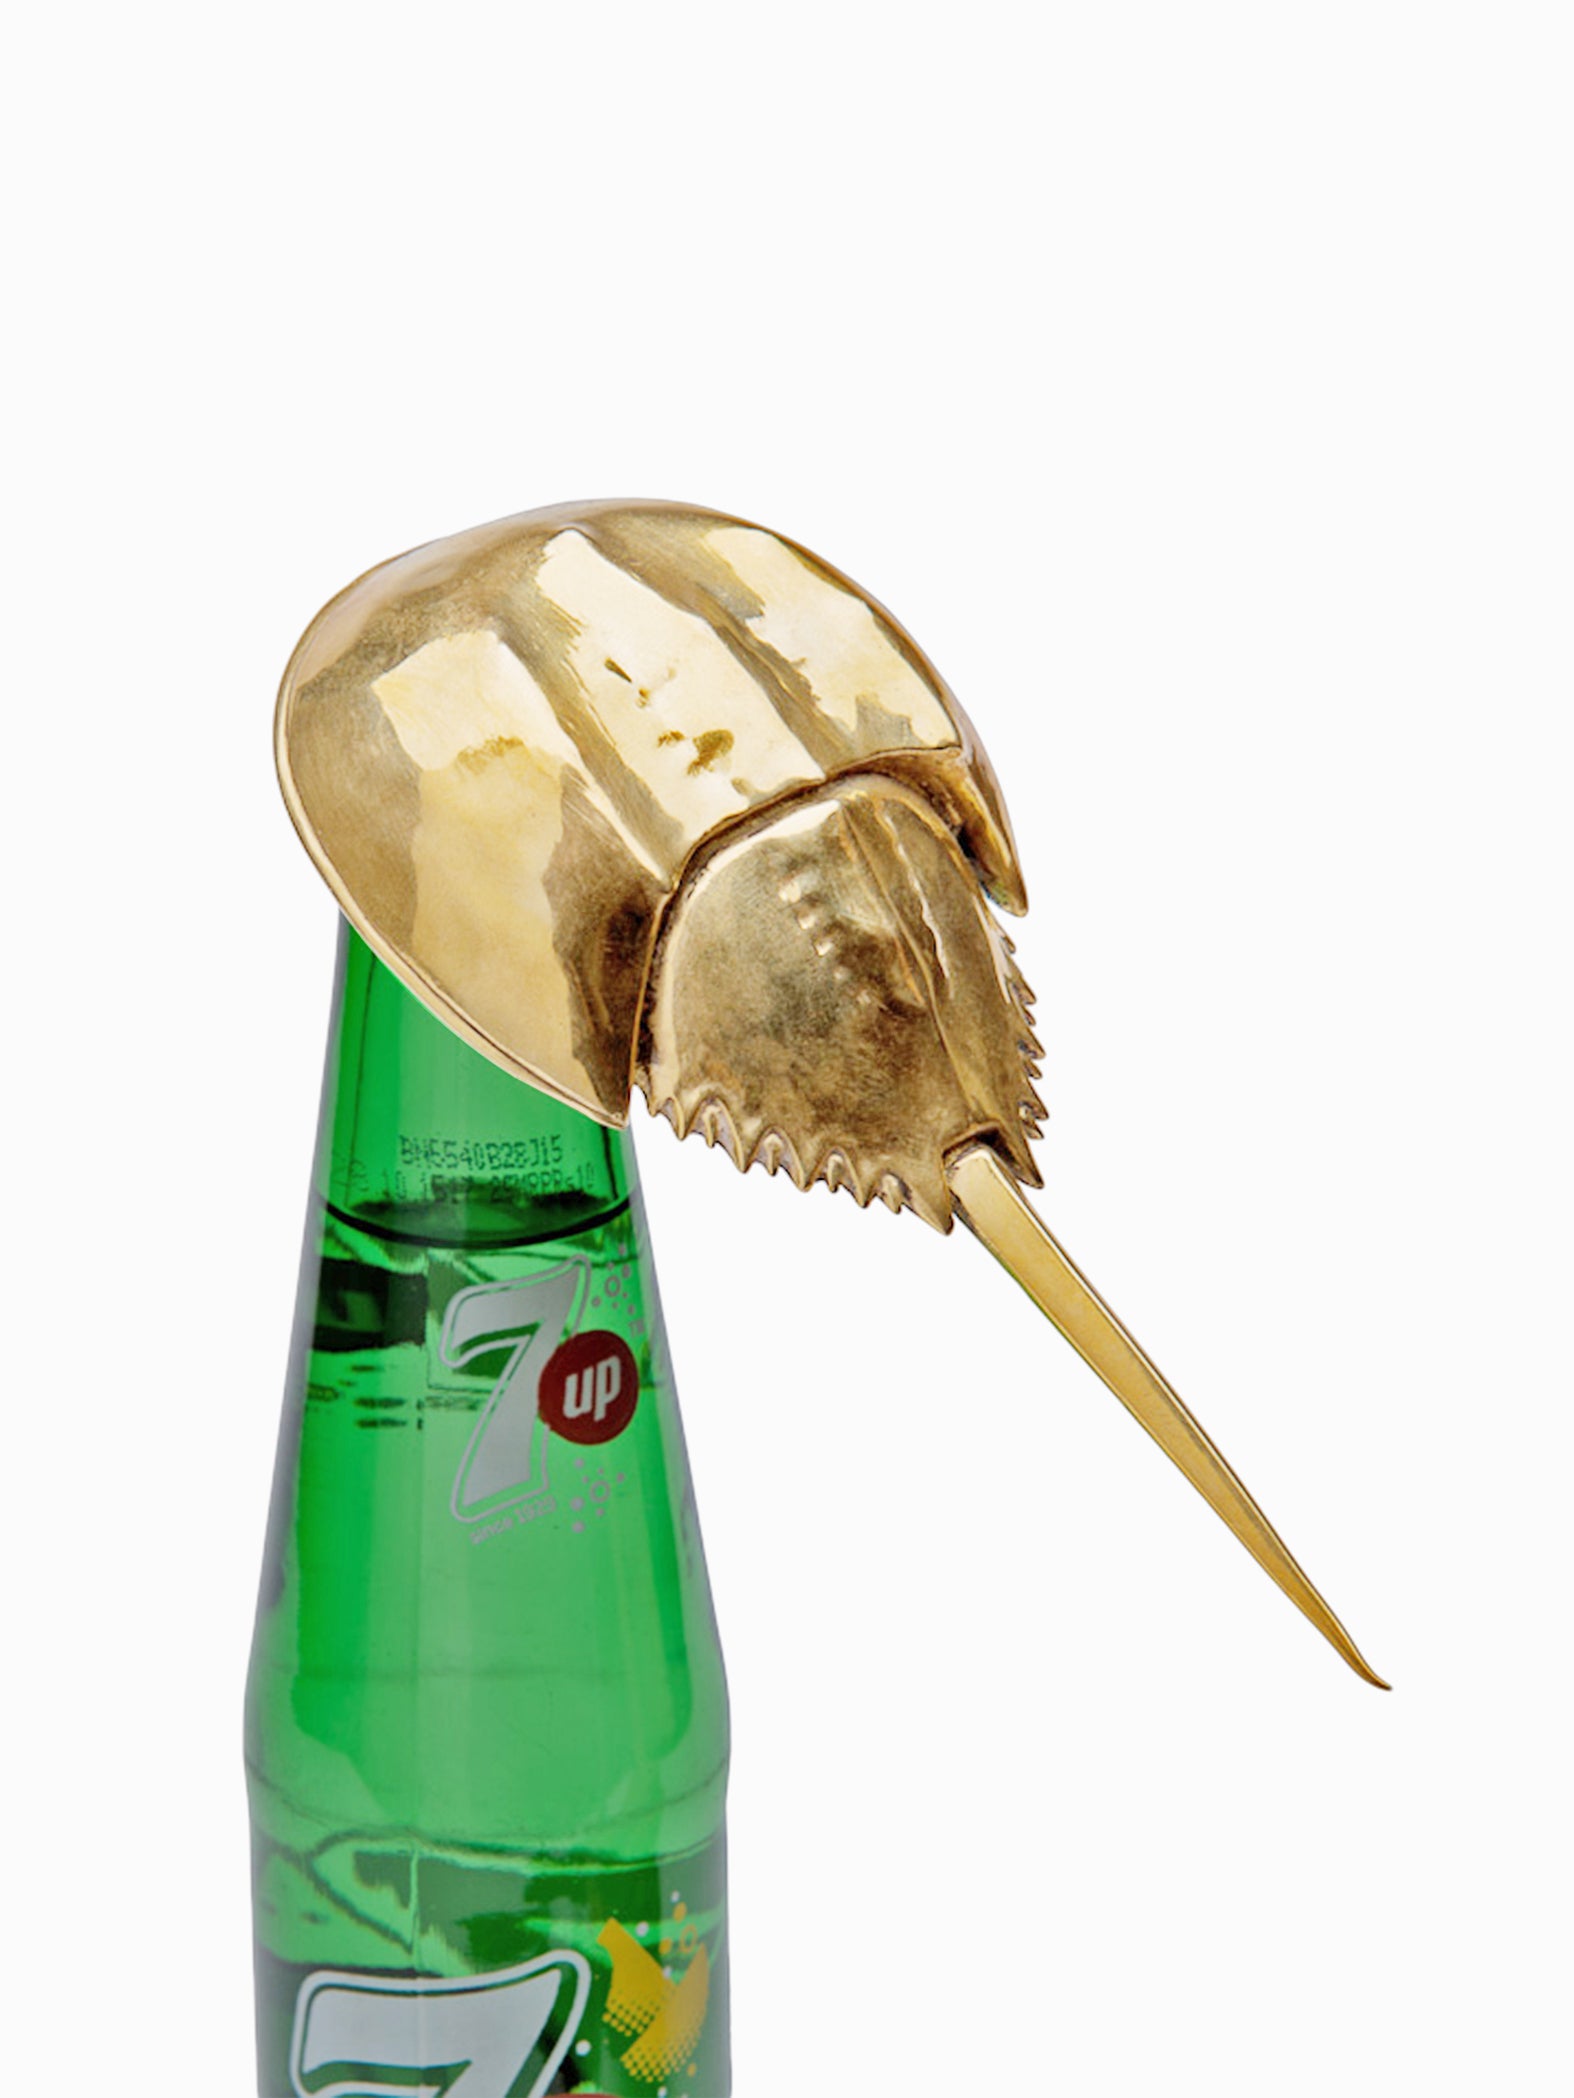 Horseshoe Crab Bottle Opener by AnanTaya